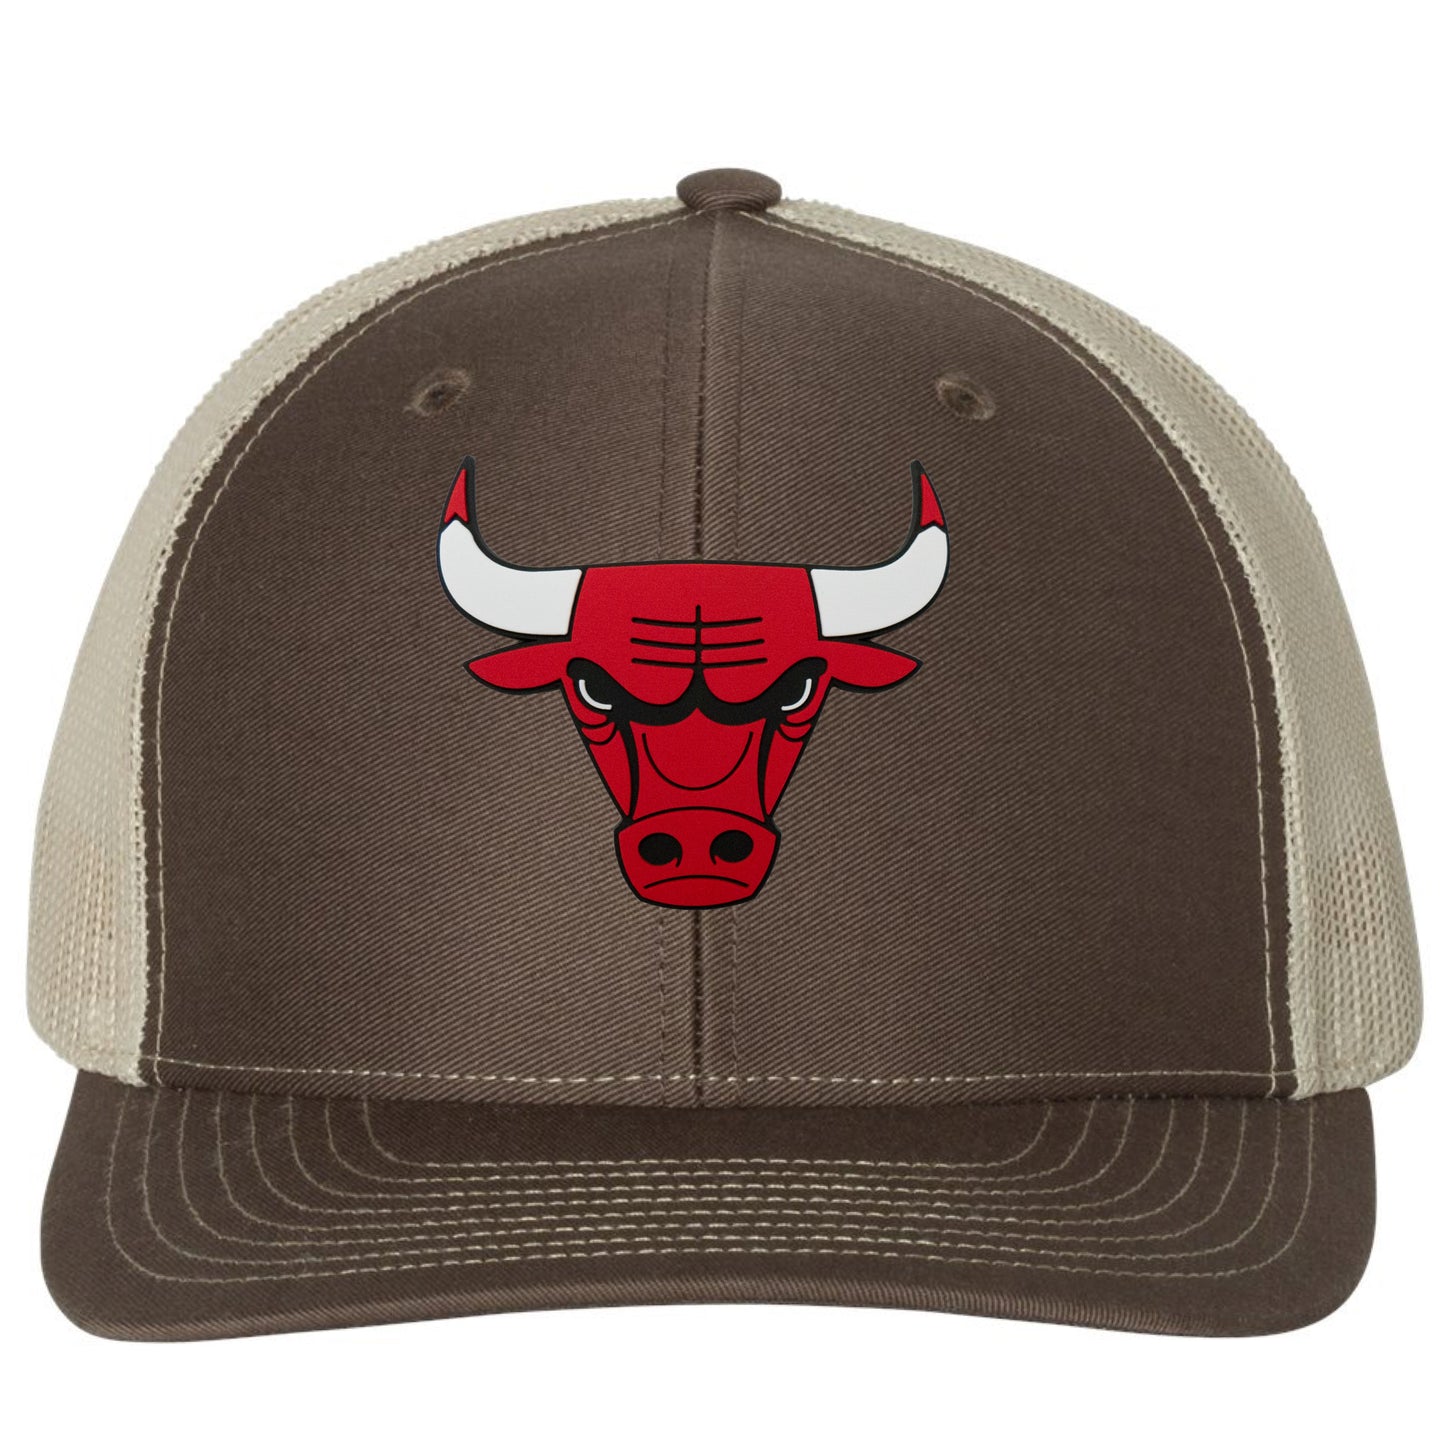 Chicago Bulls 3D YP Snapback Trucker Hat- Brown/ Khaki - Ten Gallon Hat Co.